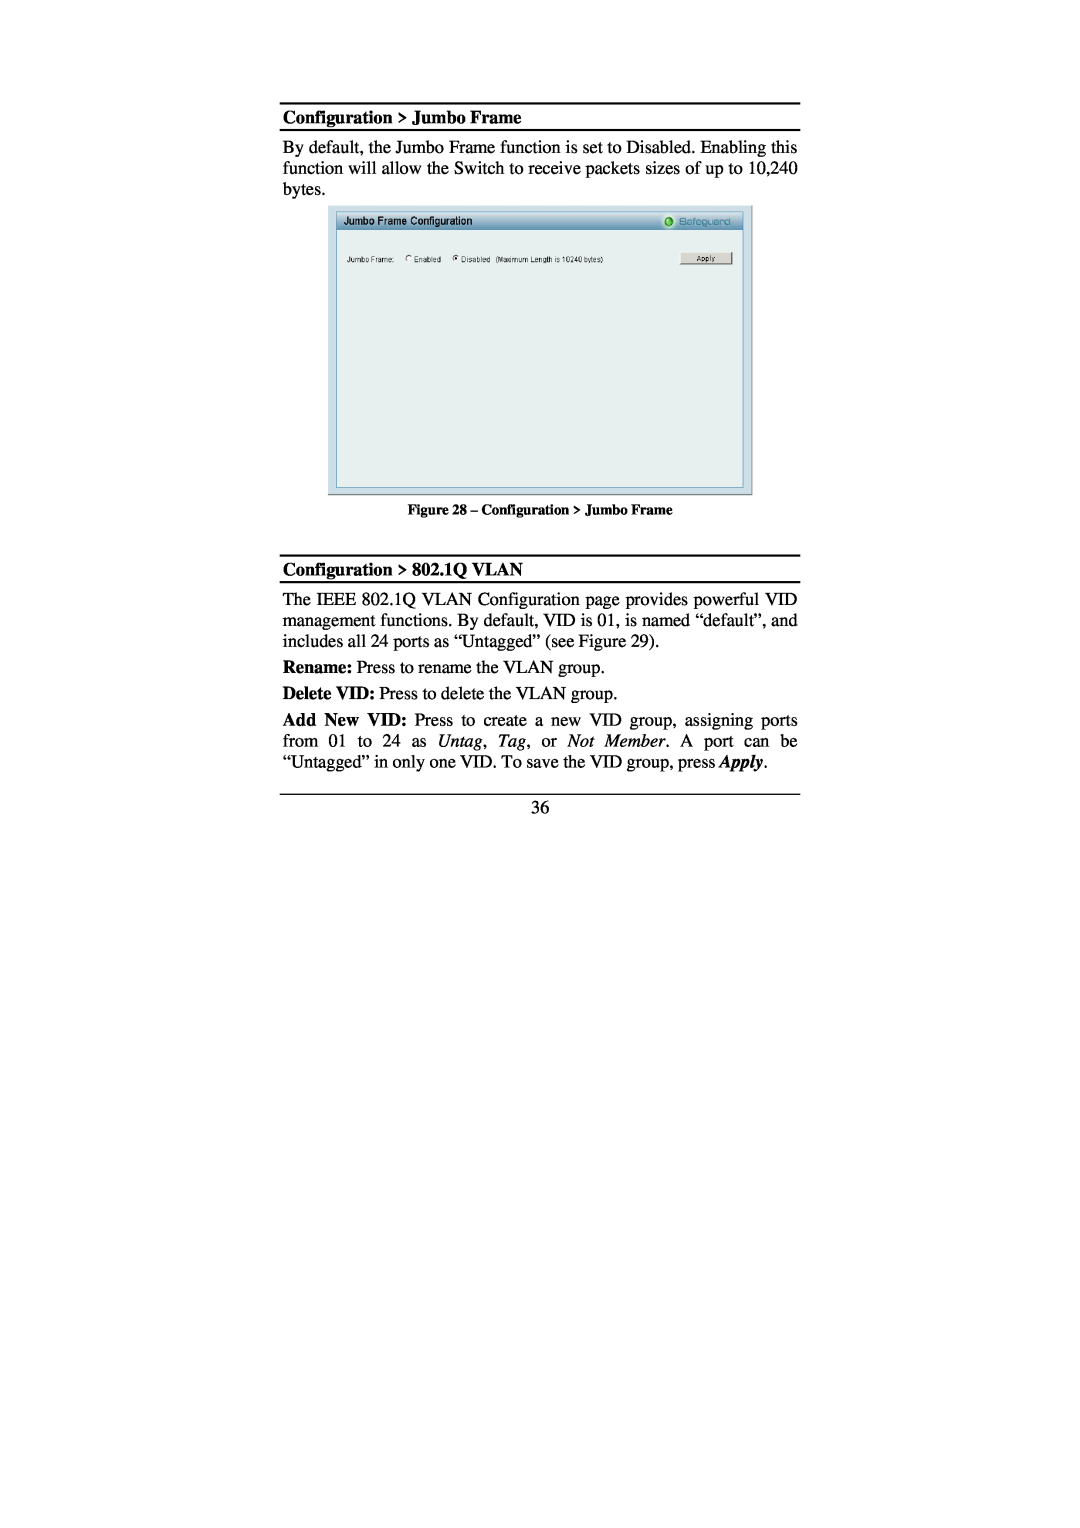 Cisco Systems DGS-1224T manual Configuration Jumbo Frame, Configuration 802.1Q VLAN 